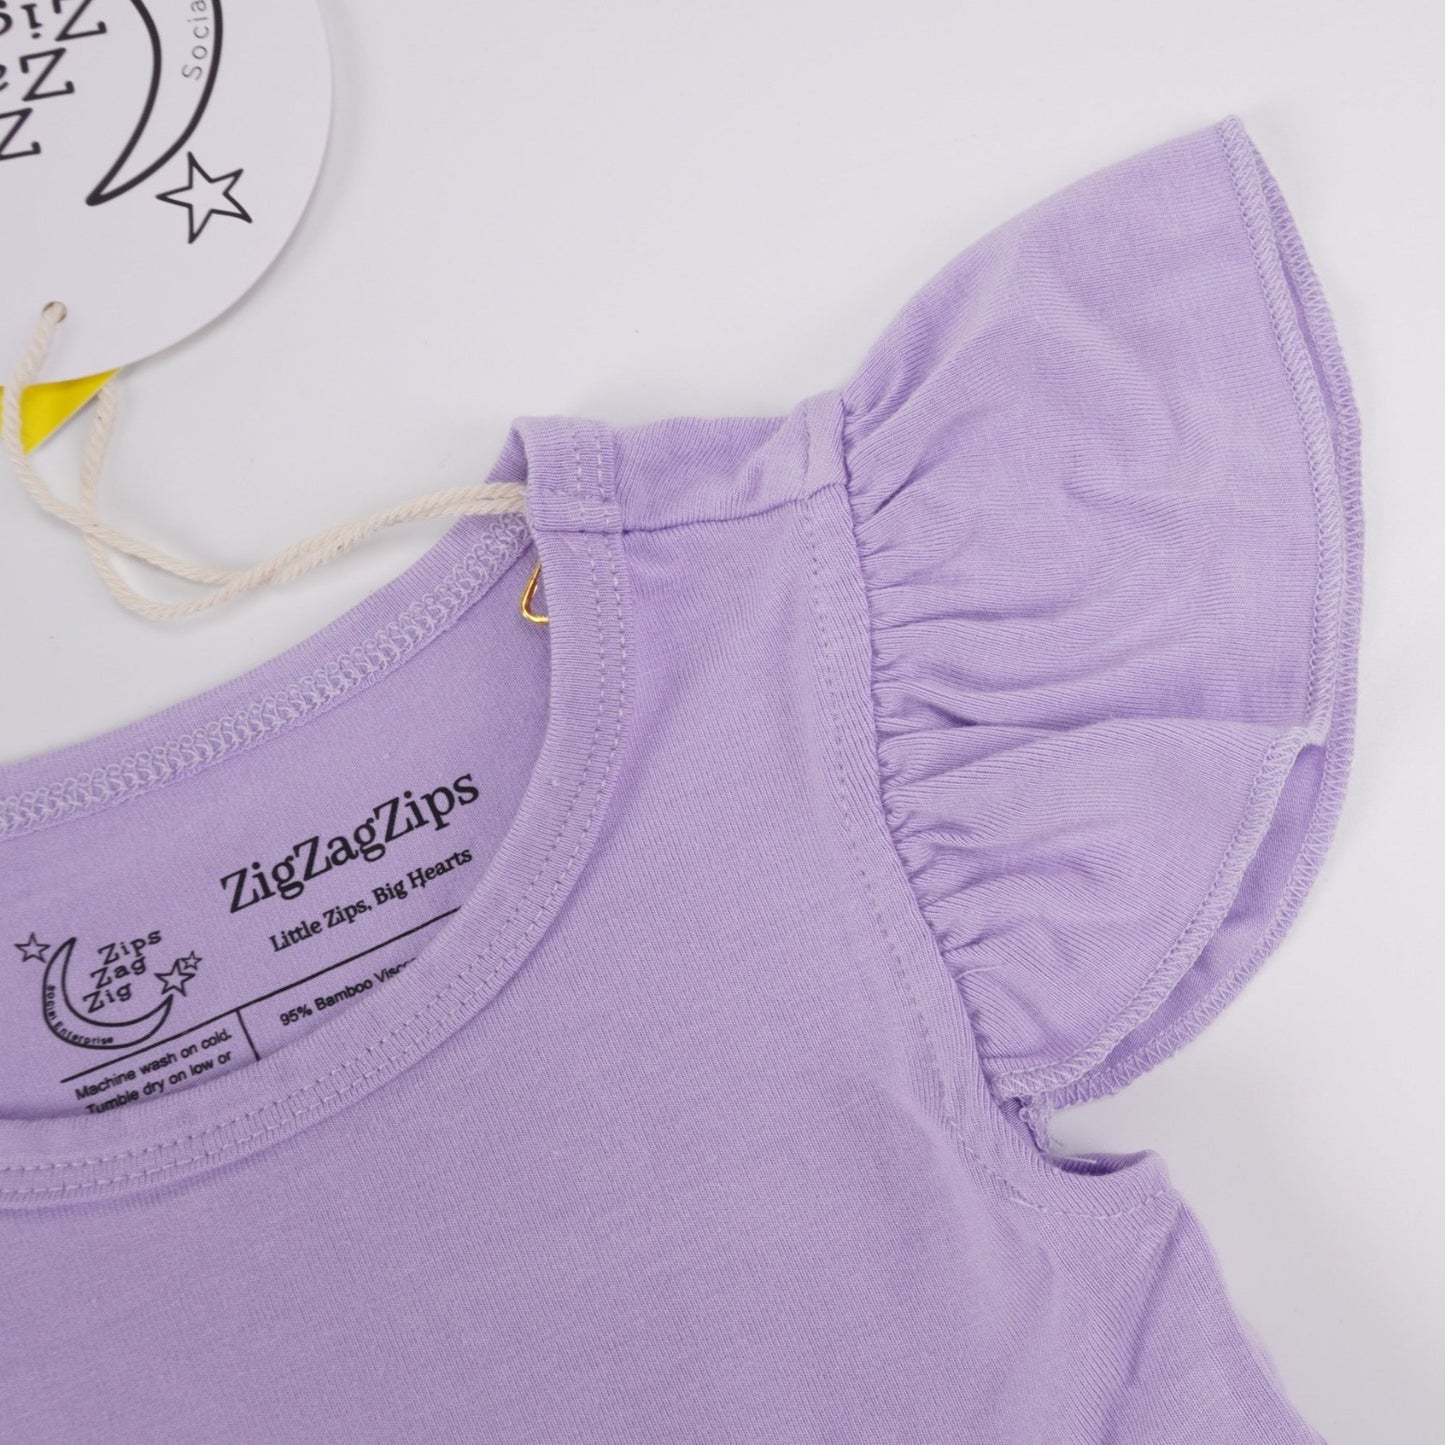 Lupus Foundation of America - Purple Twirl Dress with Bodysuit